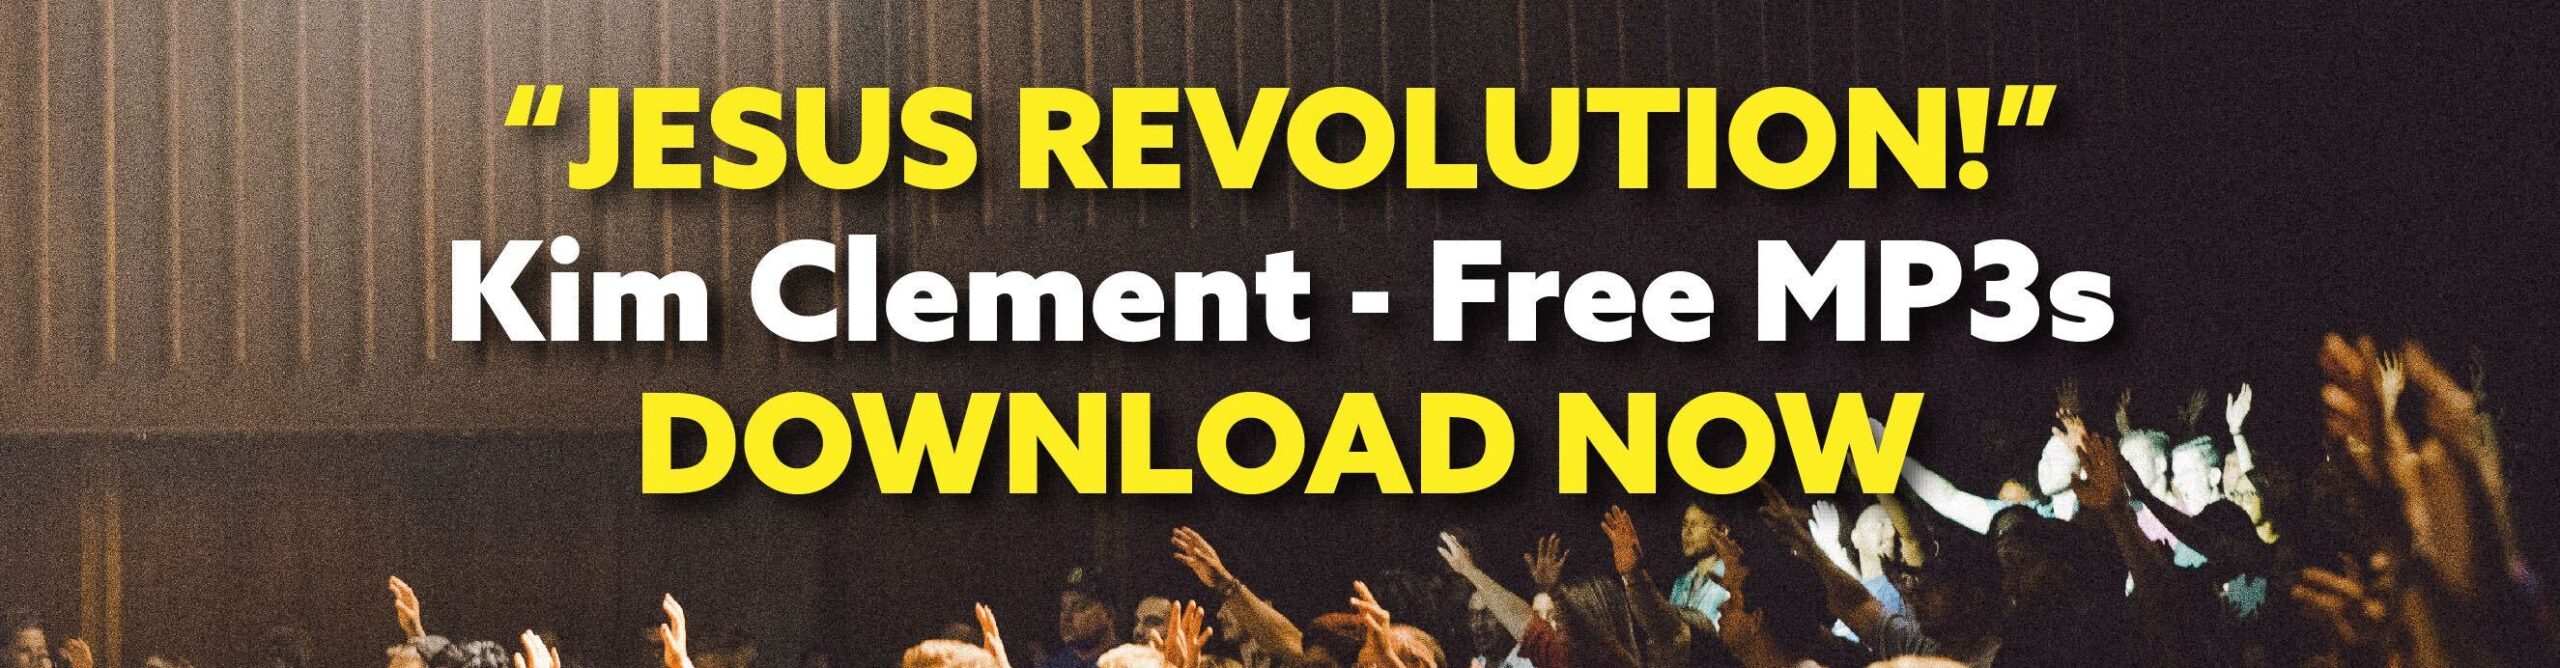 Jesus Revolution MP3